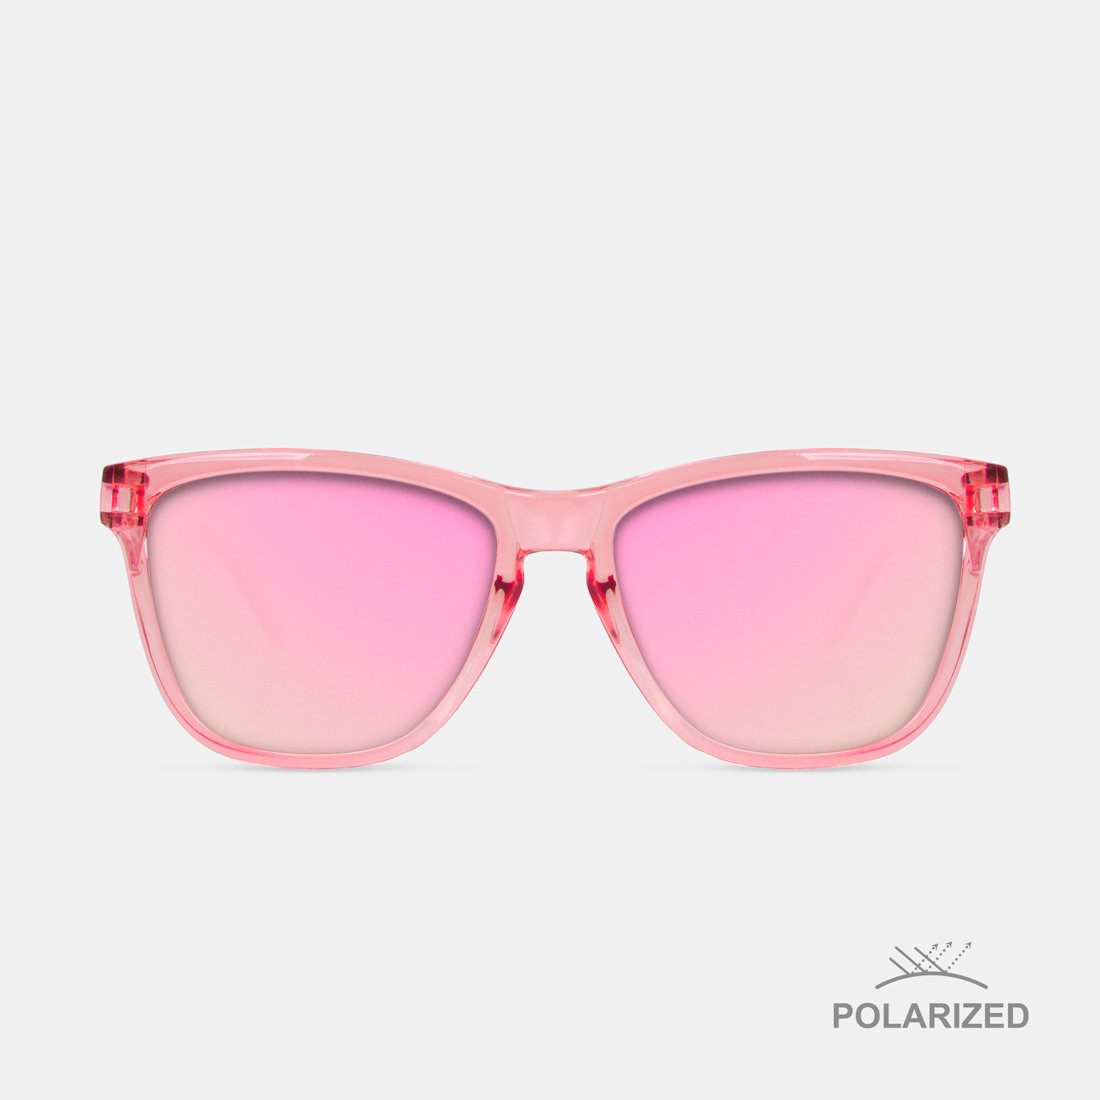 Roosevelt Trans Pink / Pink Polarized